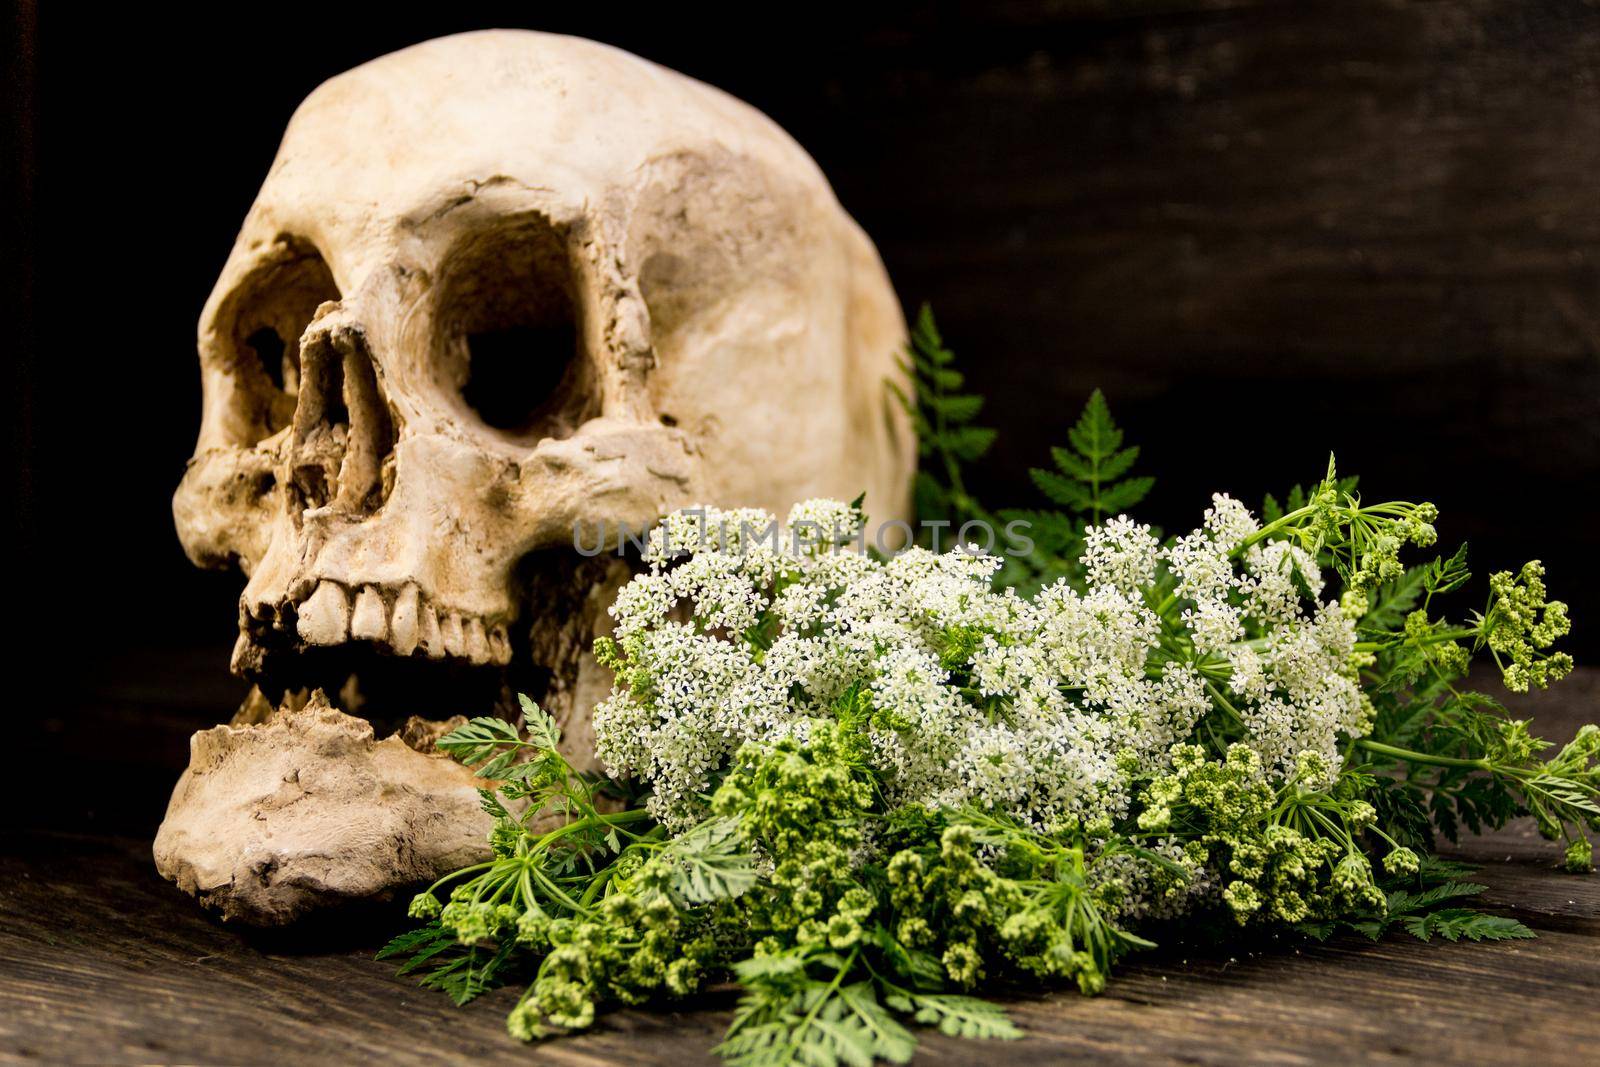 a bouquet of hemlock flowers with a human skull by GabrielaBertolini